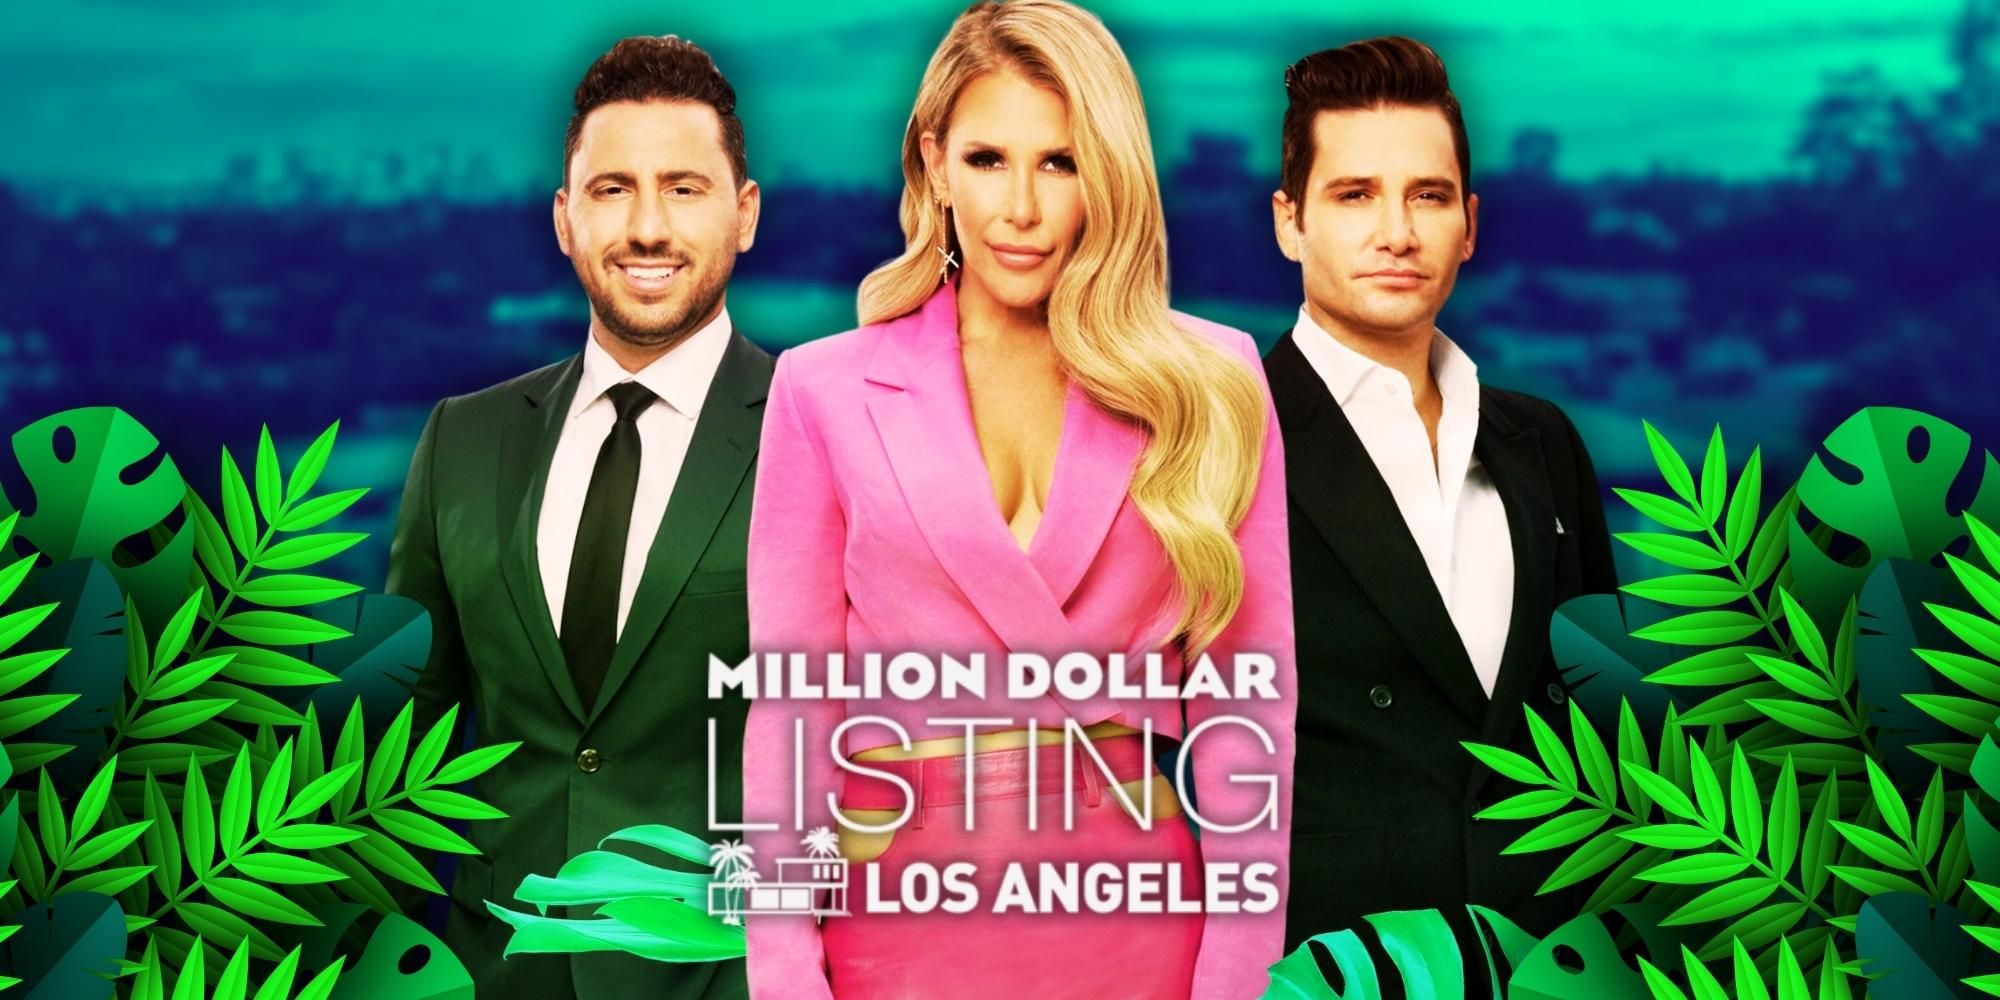 Million Dollar Listing Los Angeles cast